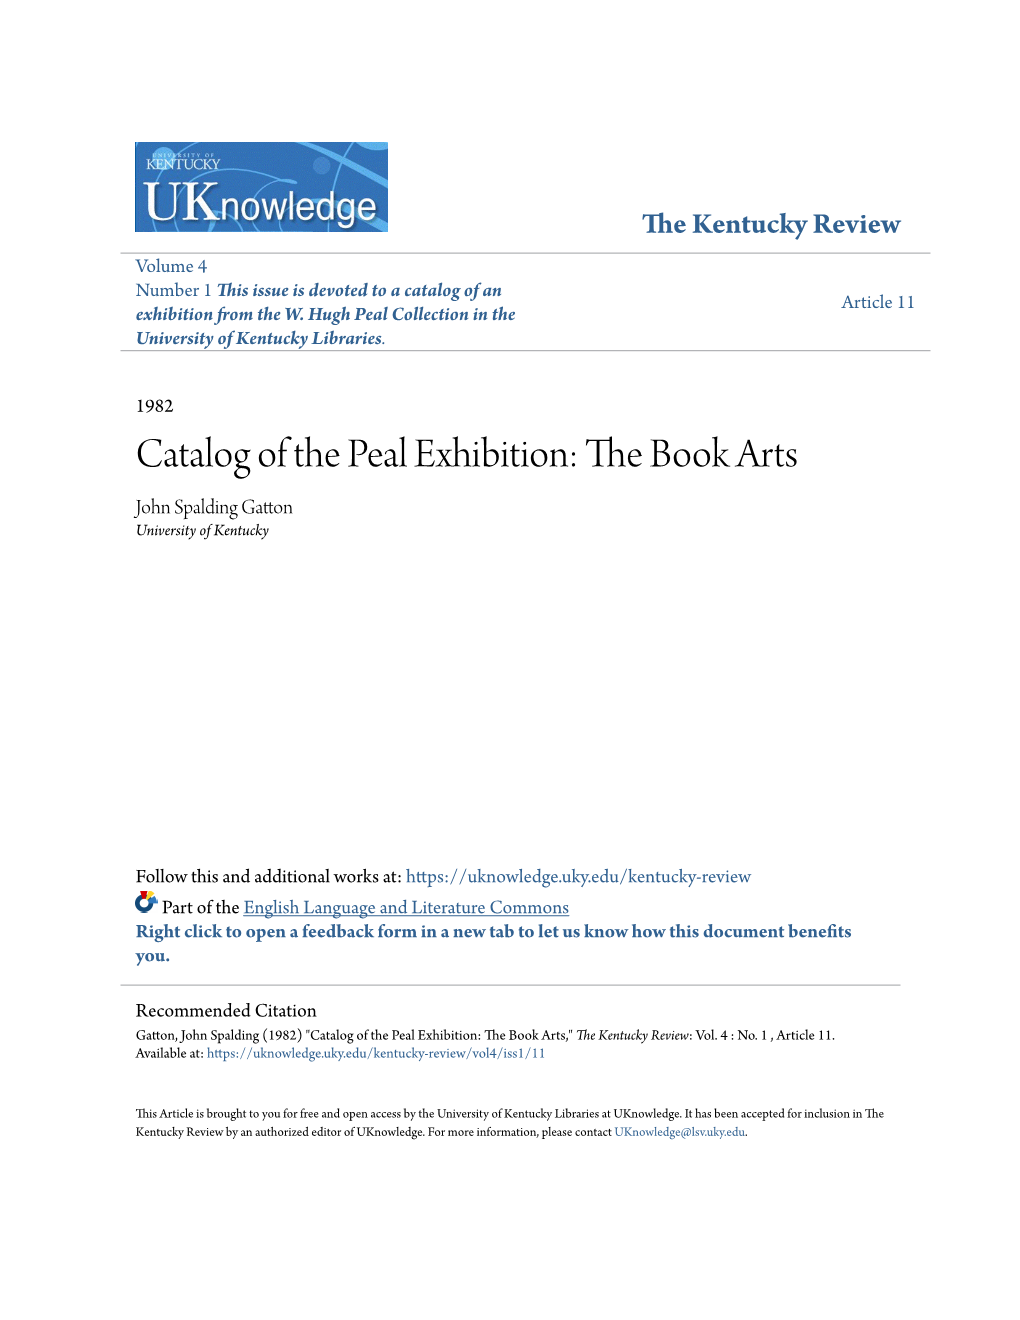 Catalog of the Peal Exhibition: the Book Arts John Spalding Gatton University of Kentucky